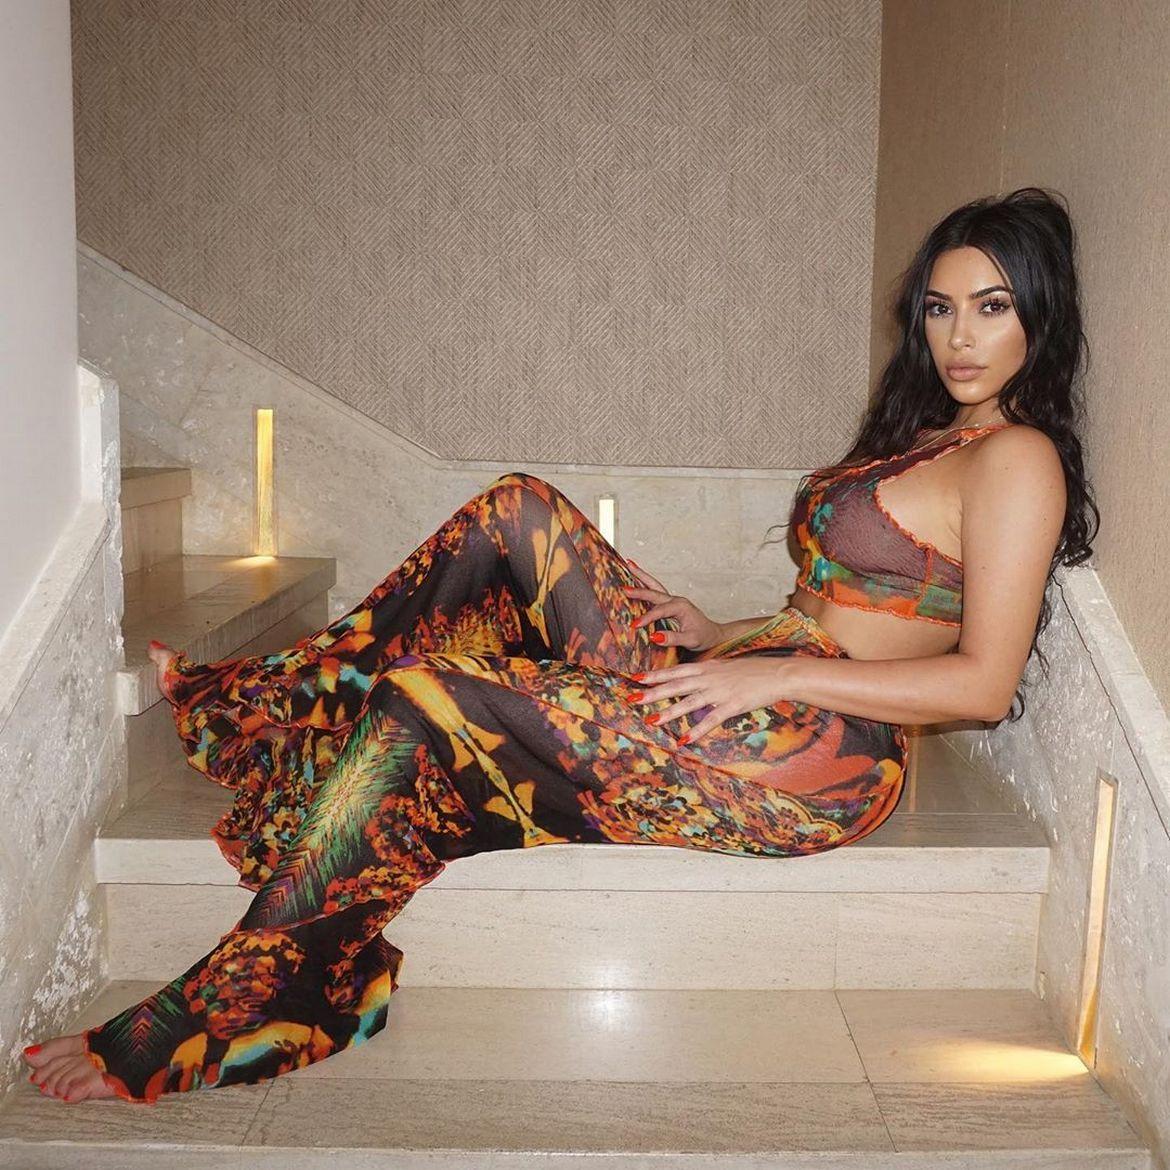 Keeping up with the luxurious life of billionaire Kim Kardashian